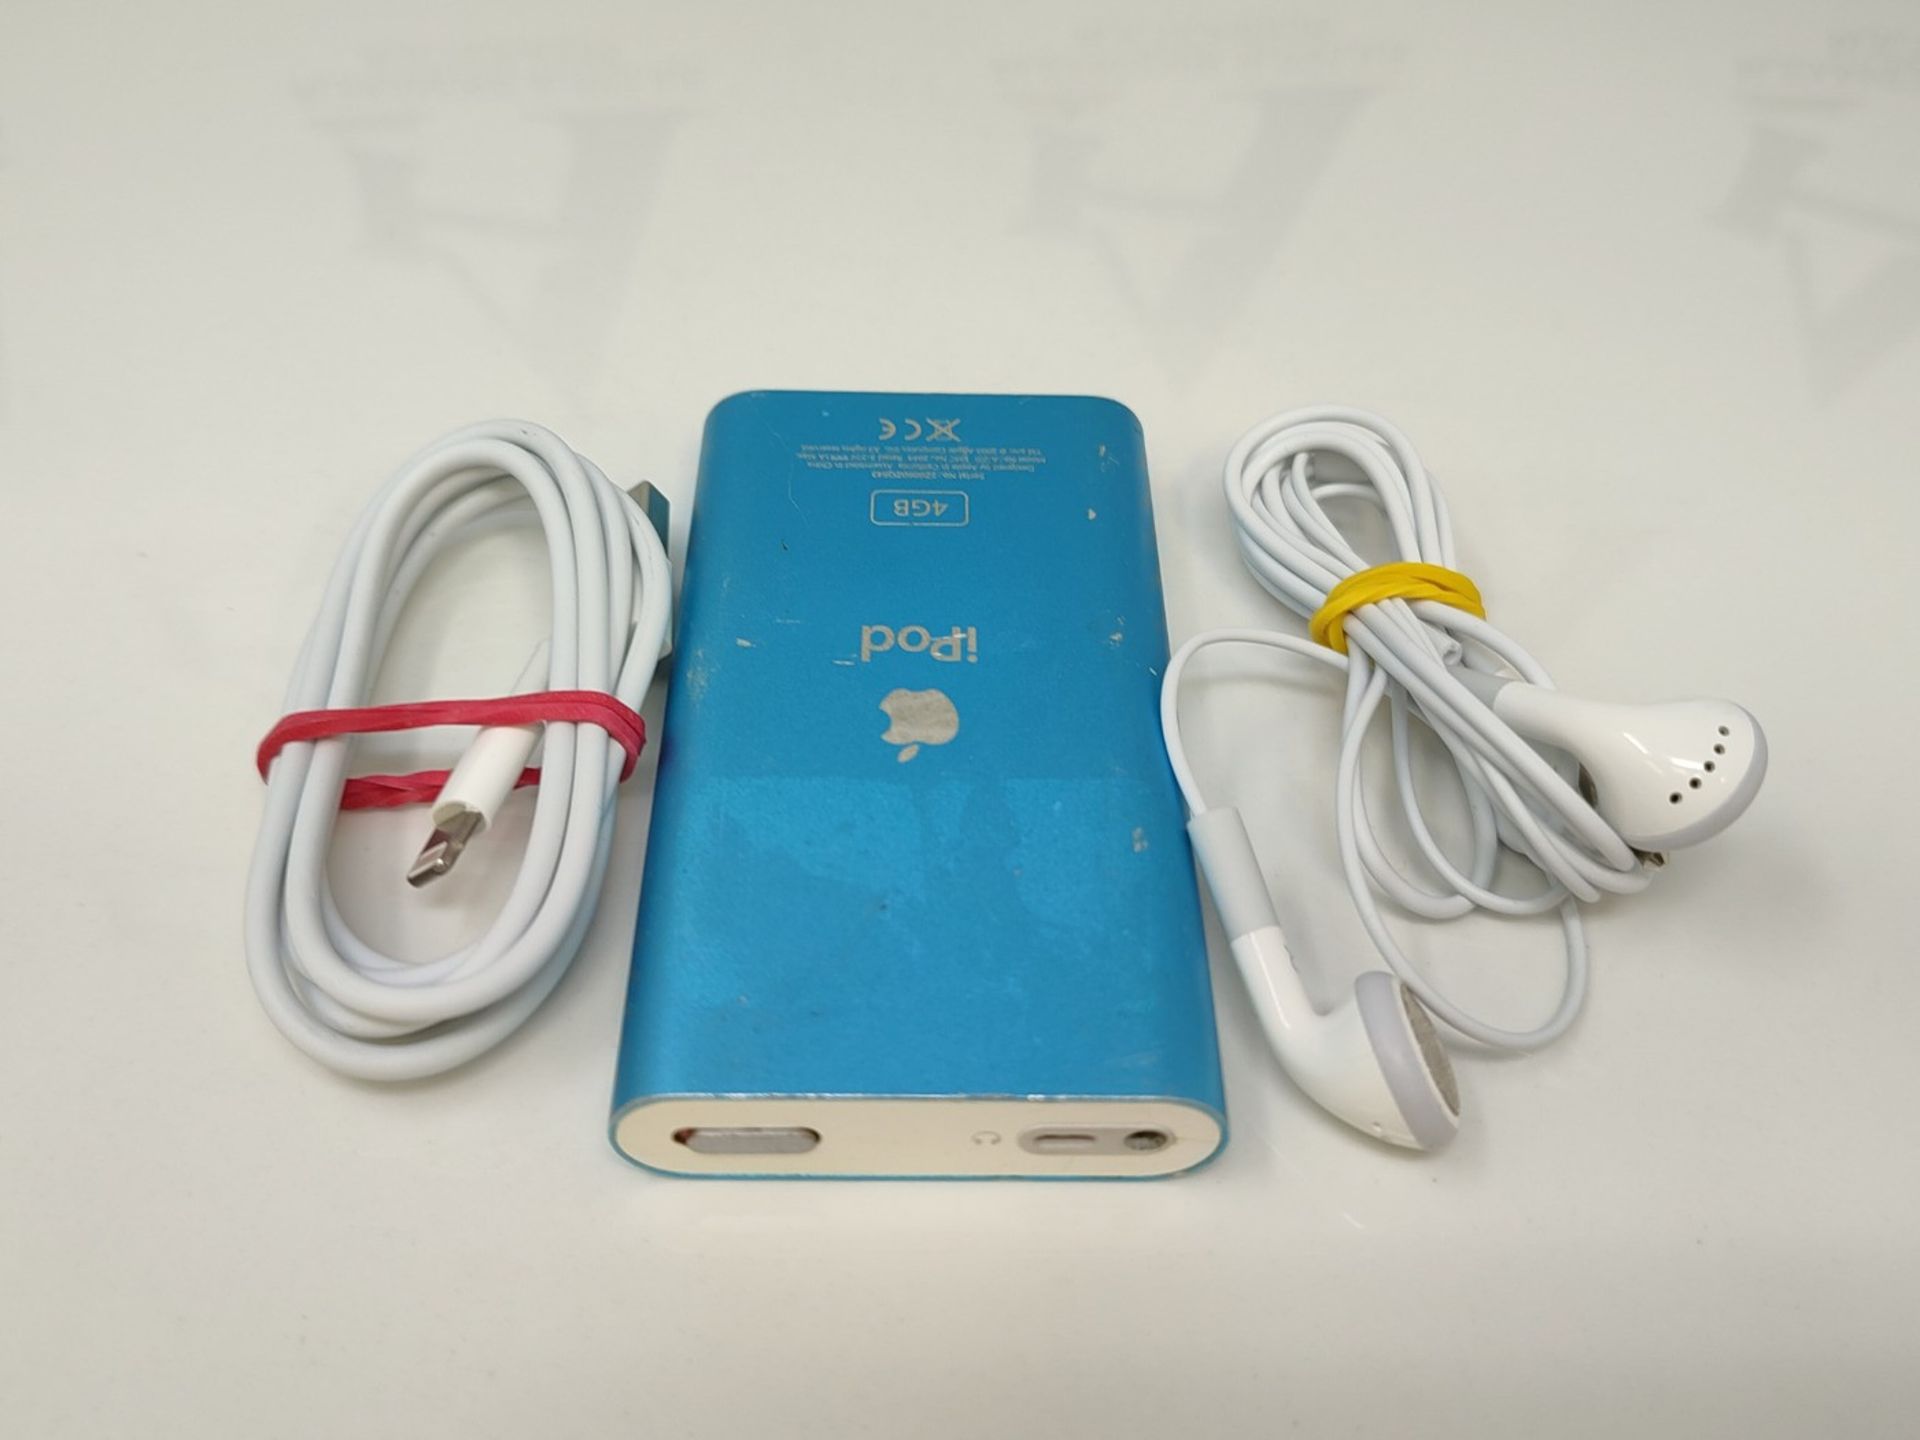 Apple iPod mini 4GB - Blue - Image 3 of 3